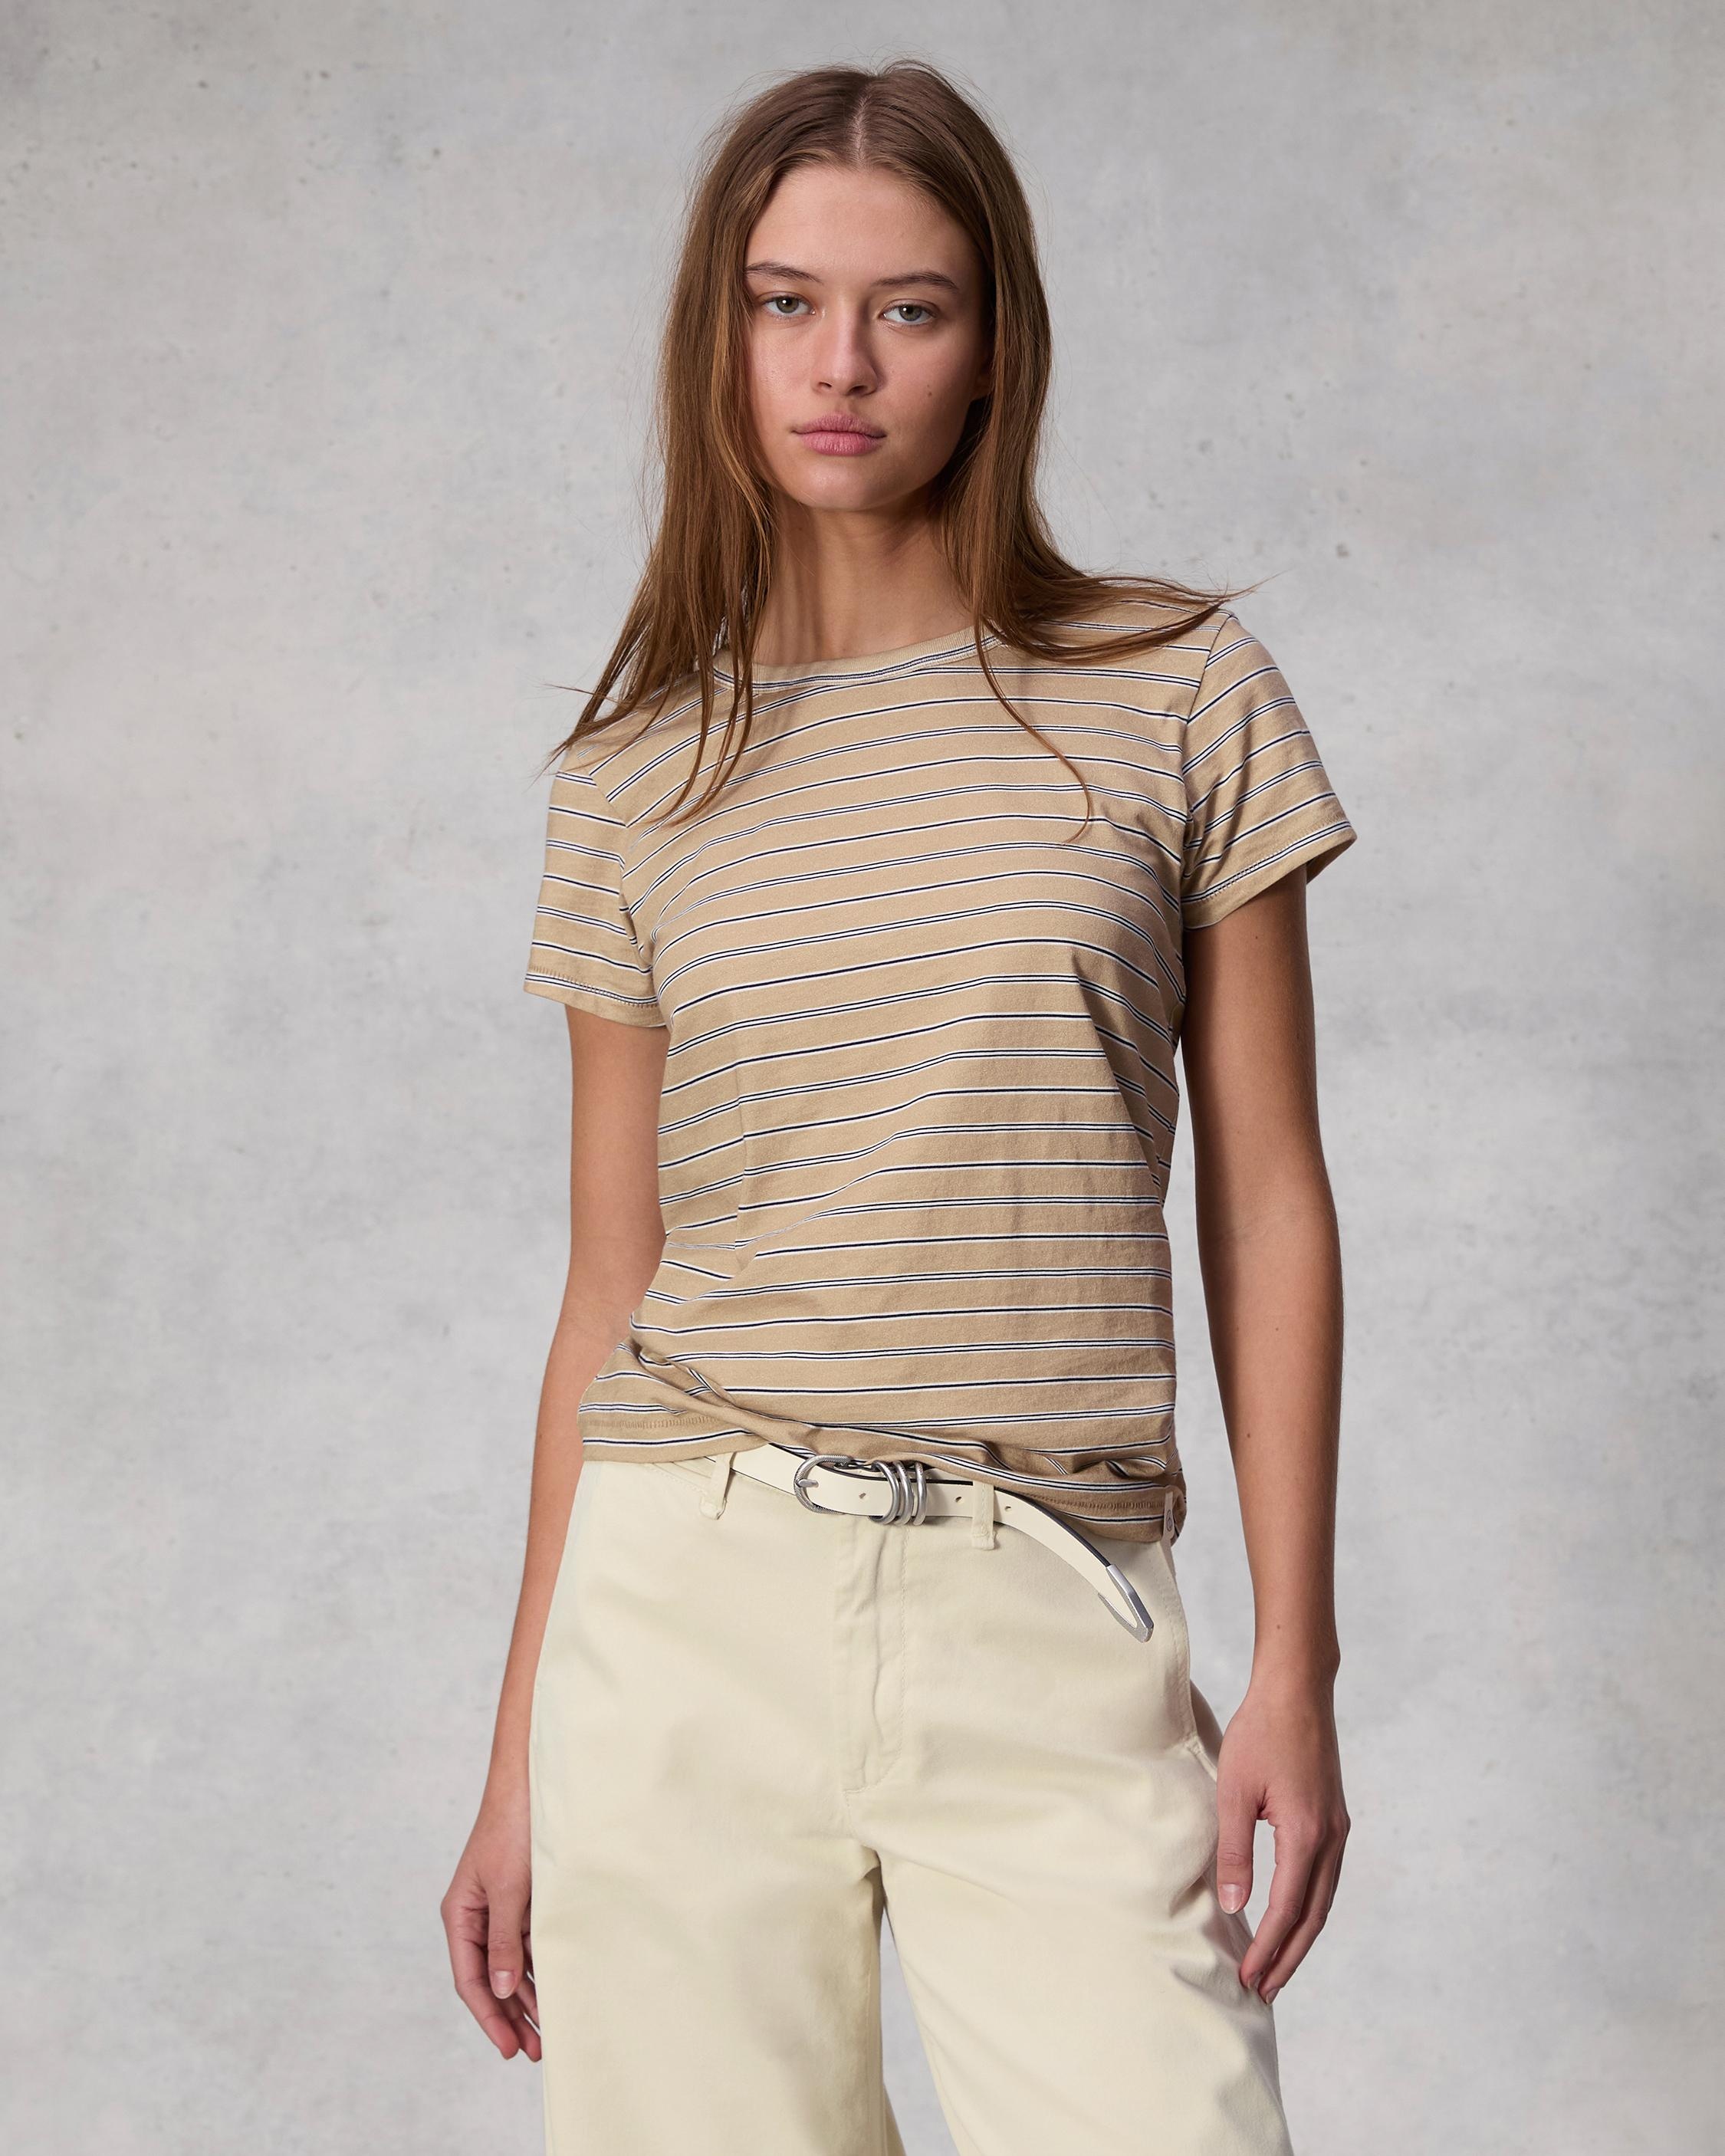 The Slub Stripe Tee
Cotton T-Shirt - 2